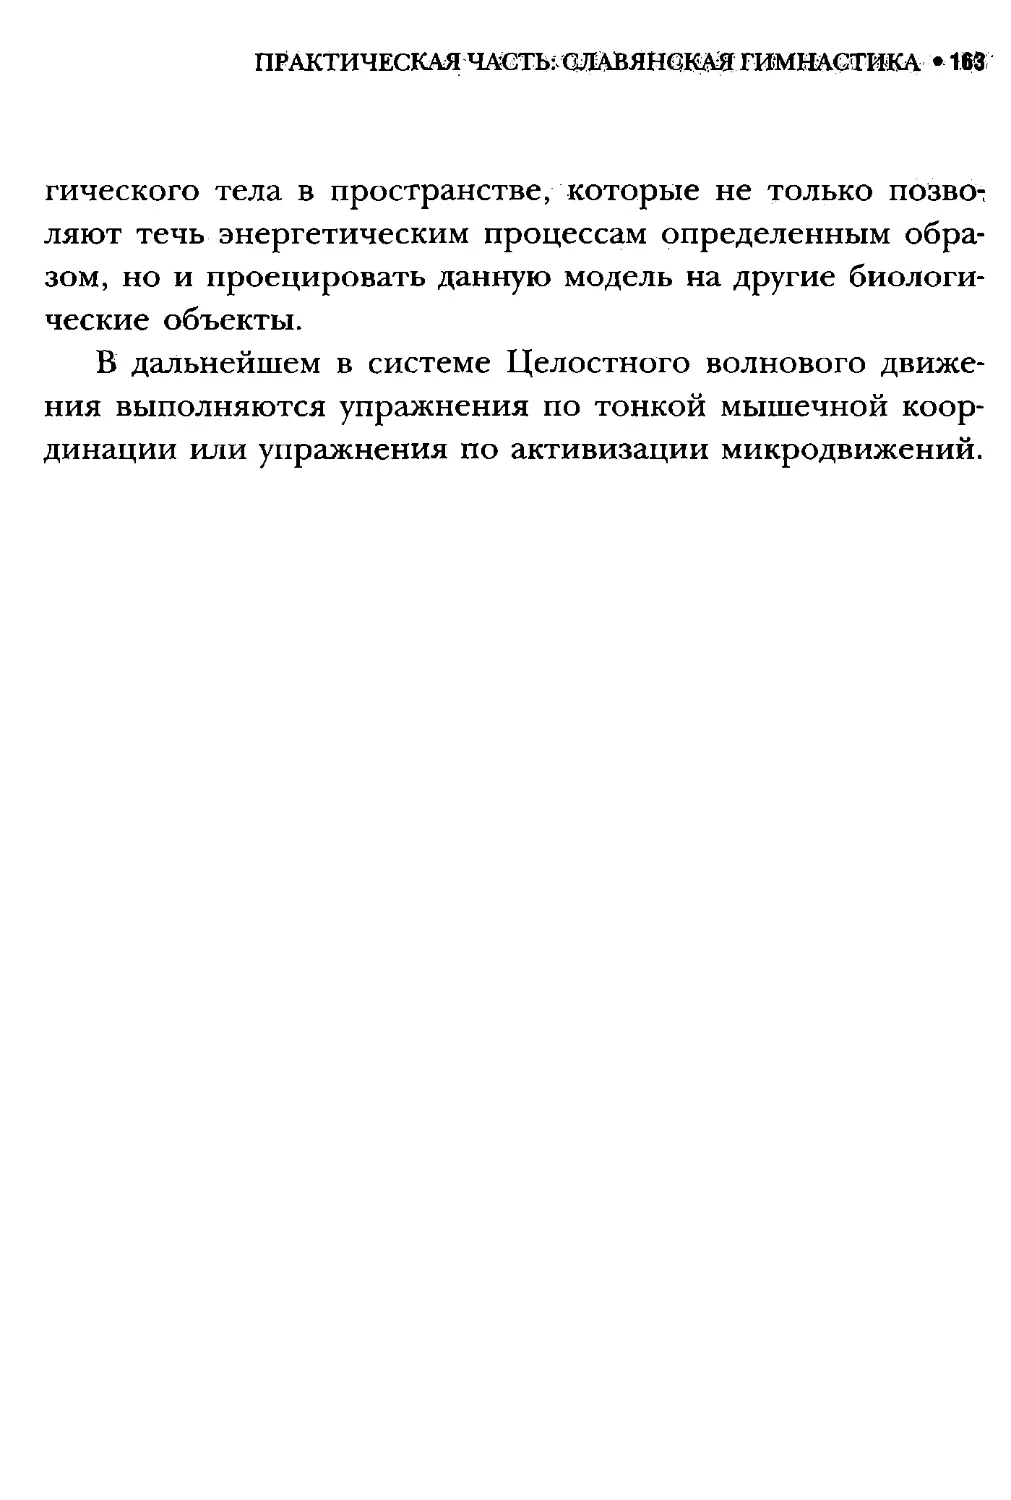 ﻿СлавянеТекст_page0081_2